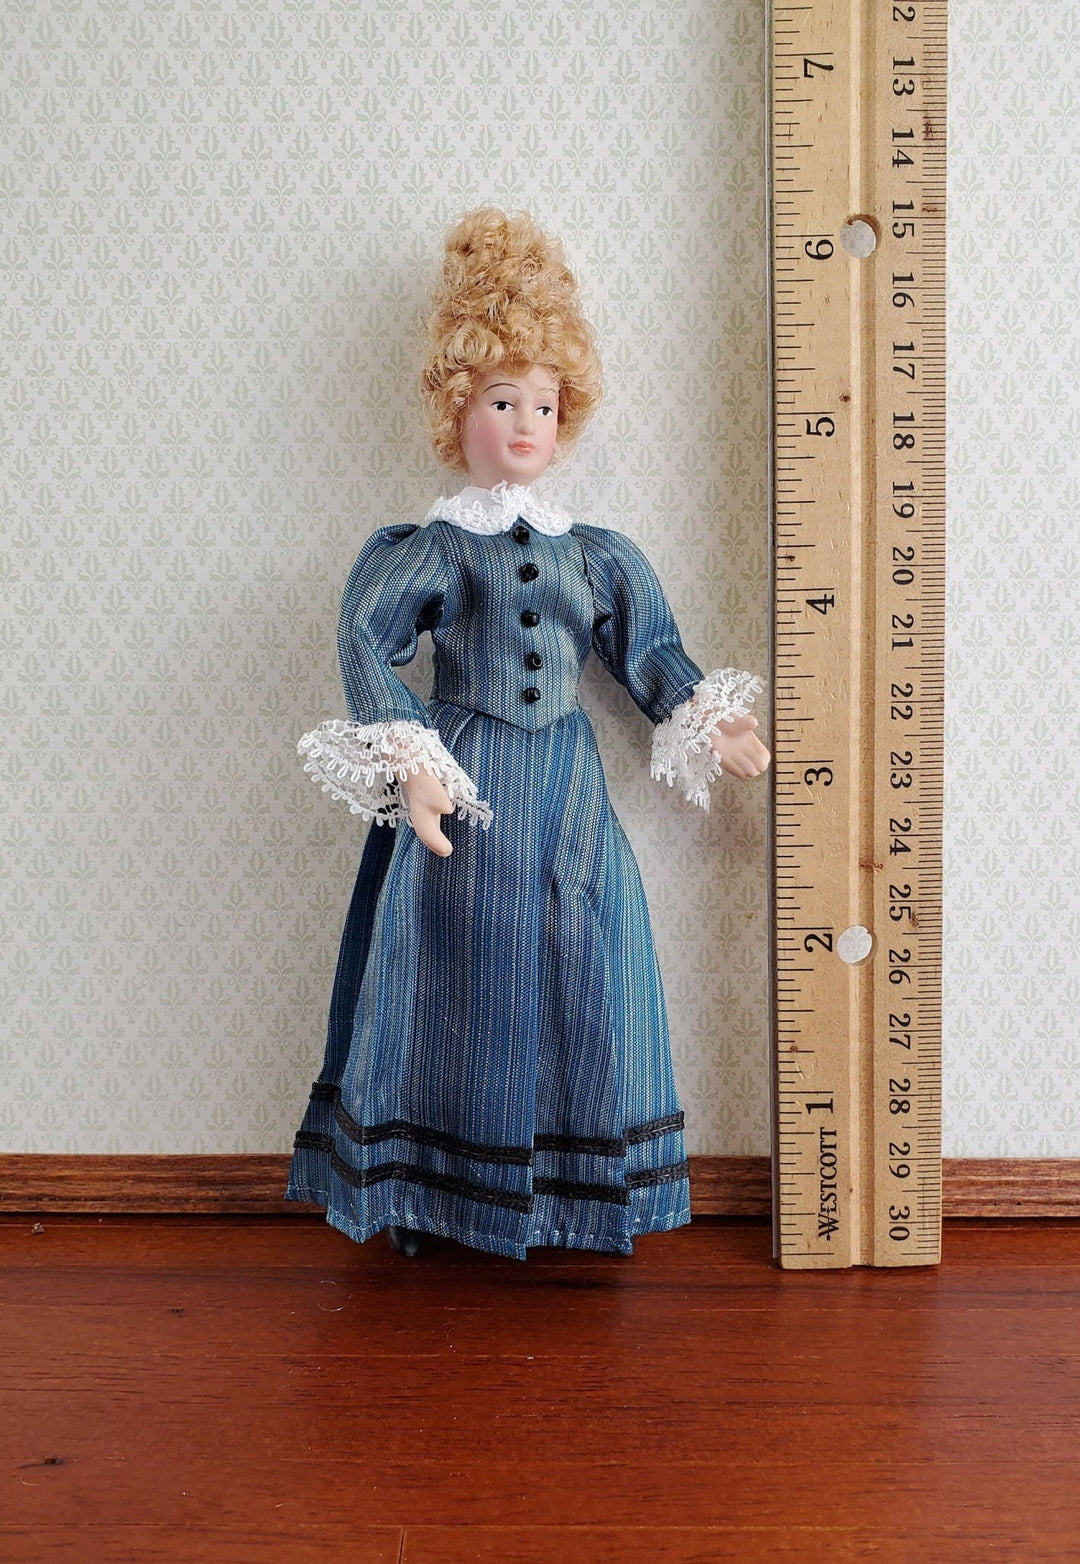 Dollhouse Miniature Victorian Doll Porcelain Poseable Blue Green Dress Lace 1:12 Scale - Miniature Crush